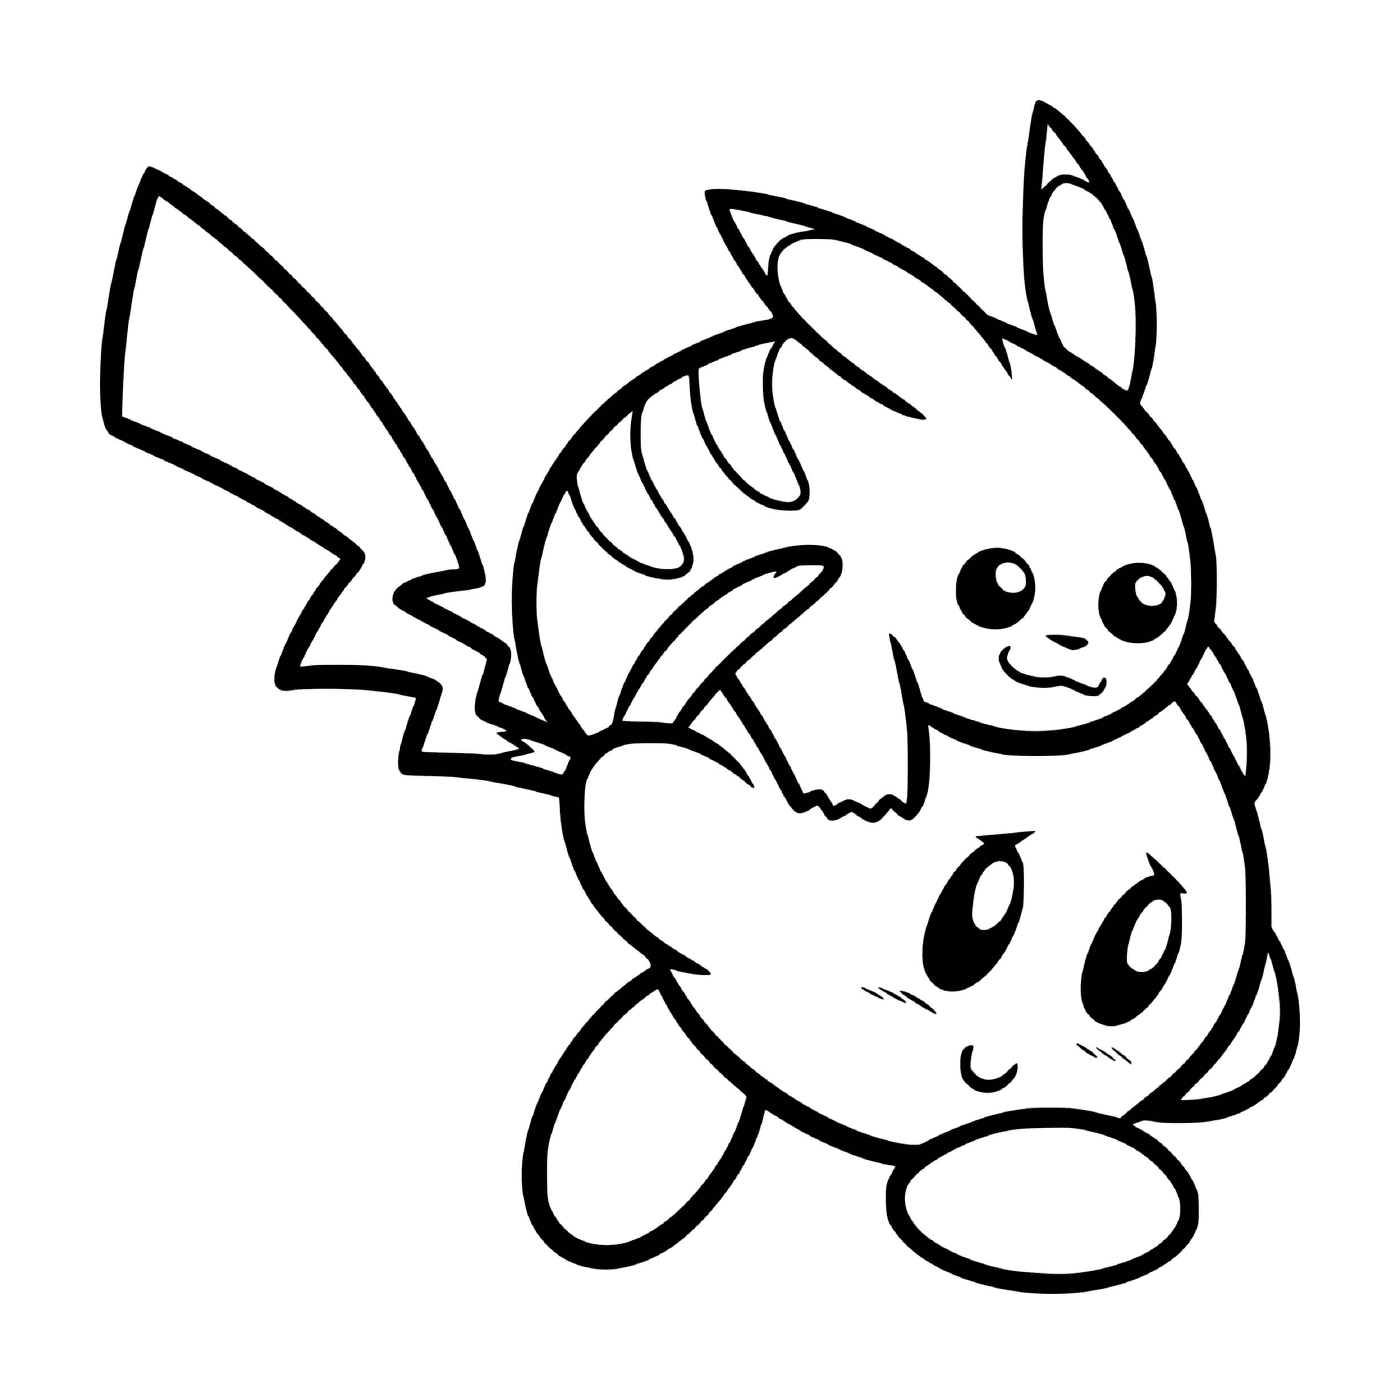  Pikachu springt auf Kirby 